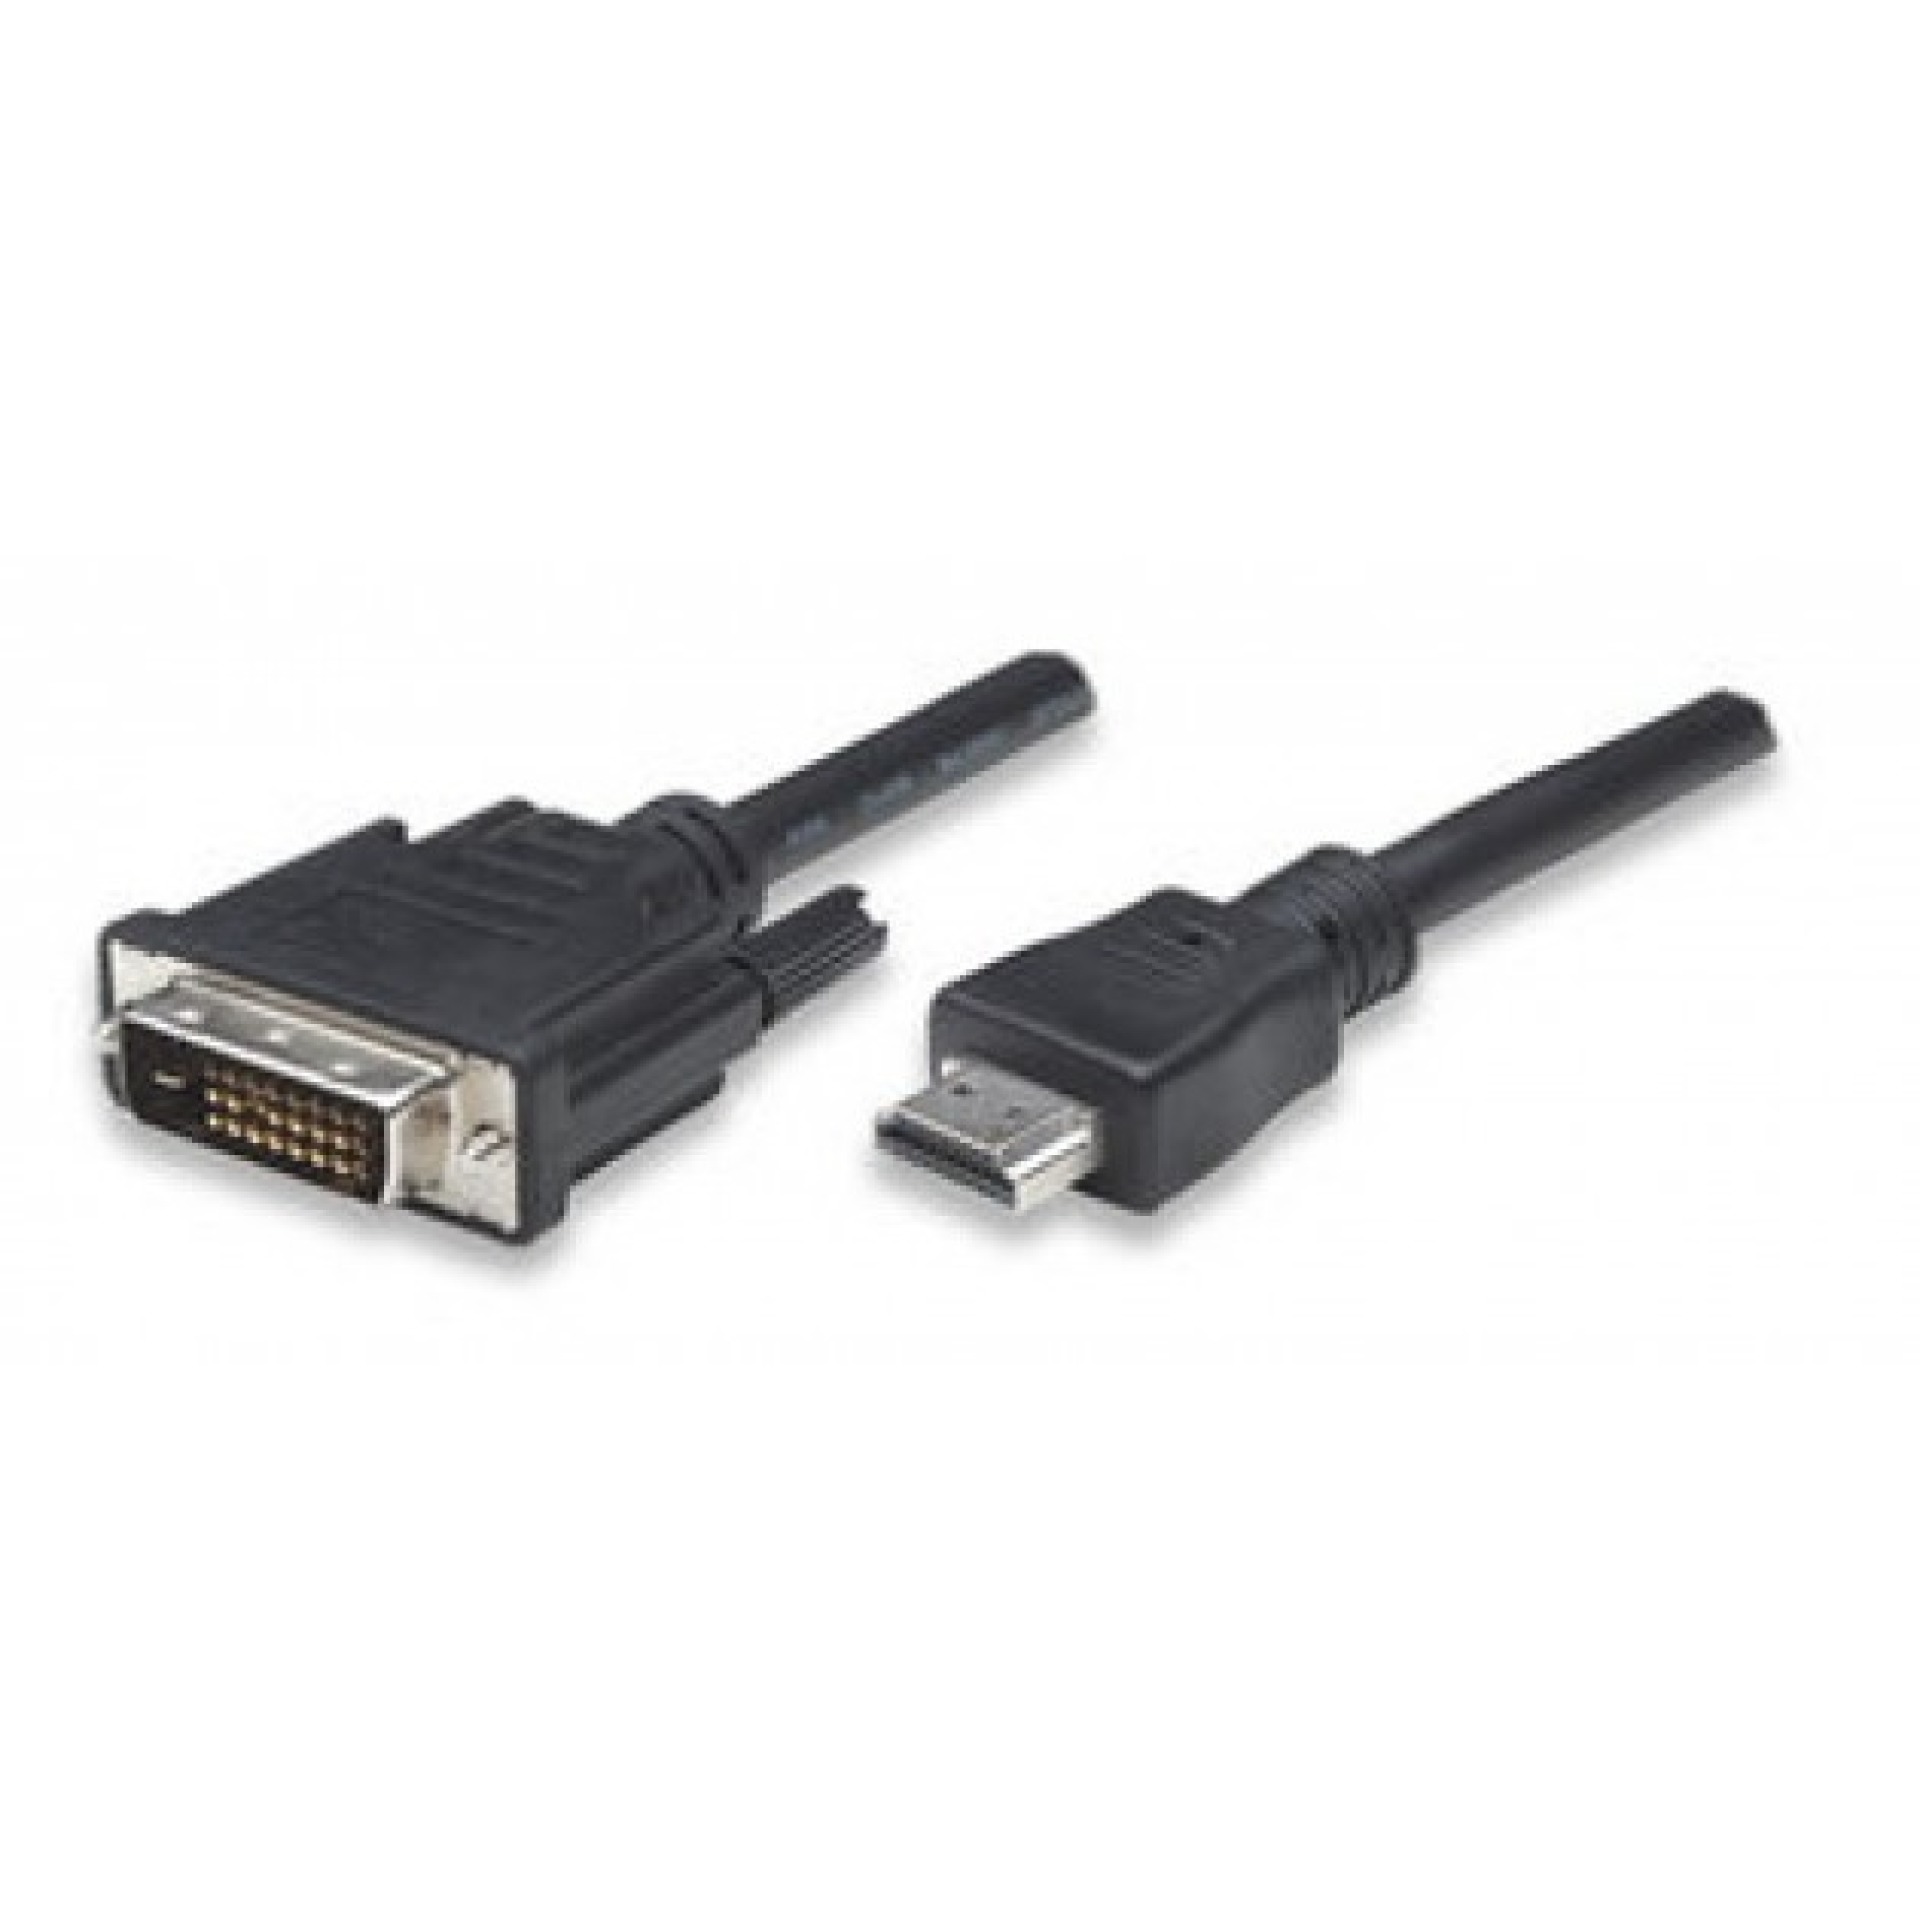 HDMI to DVI-D M/M Video Cable, black, 5 m